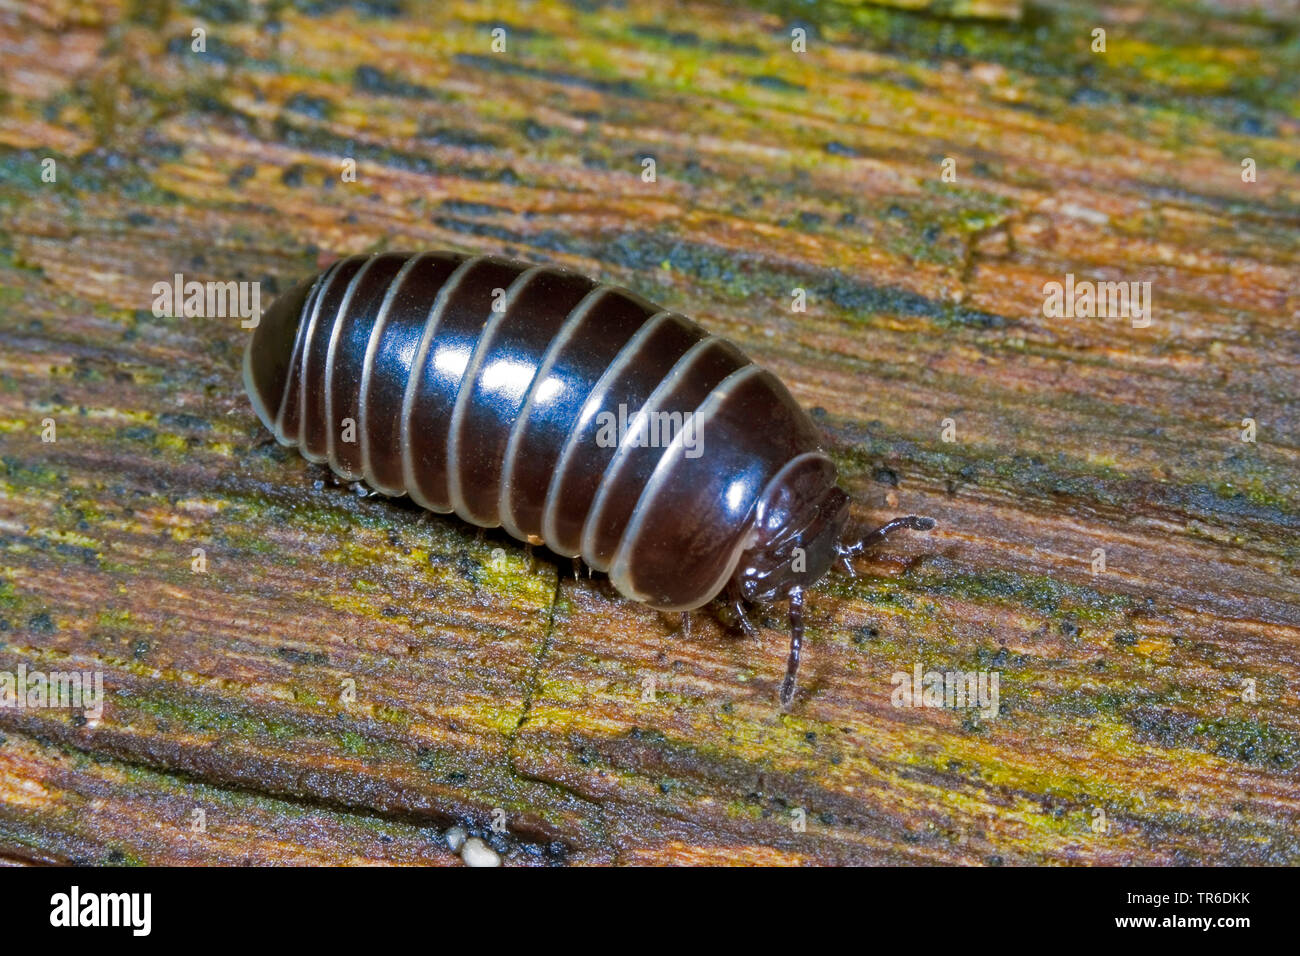 pill millipede (Glomeris marginata), on wood, Germany Stock Photo